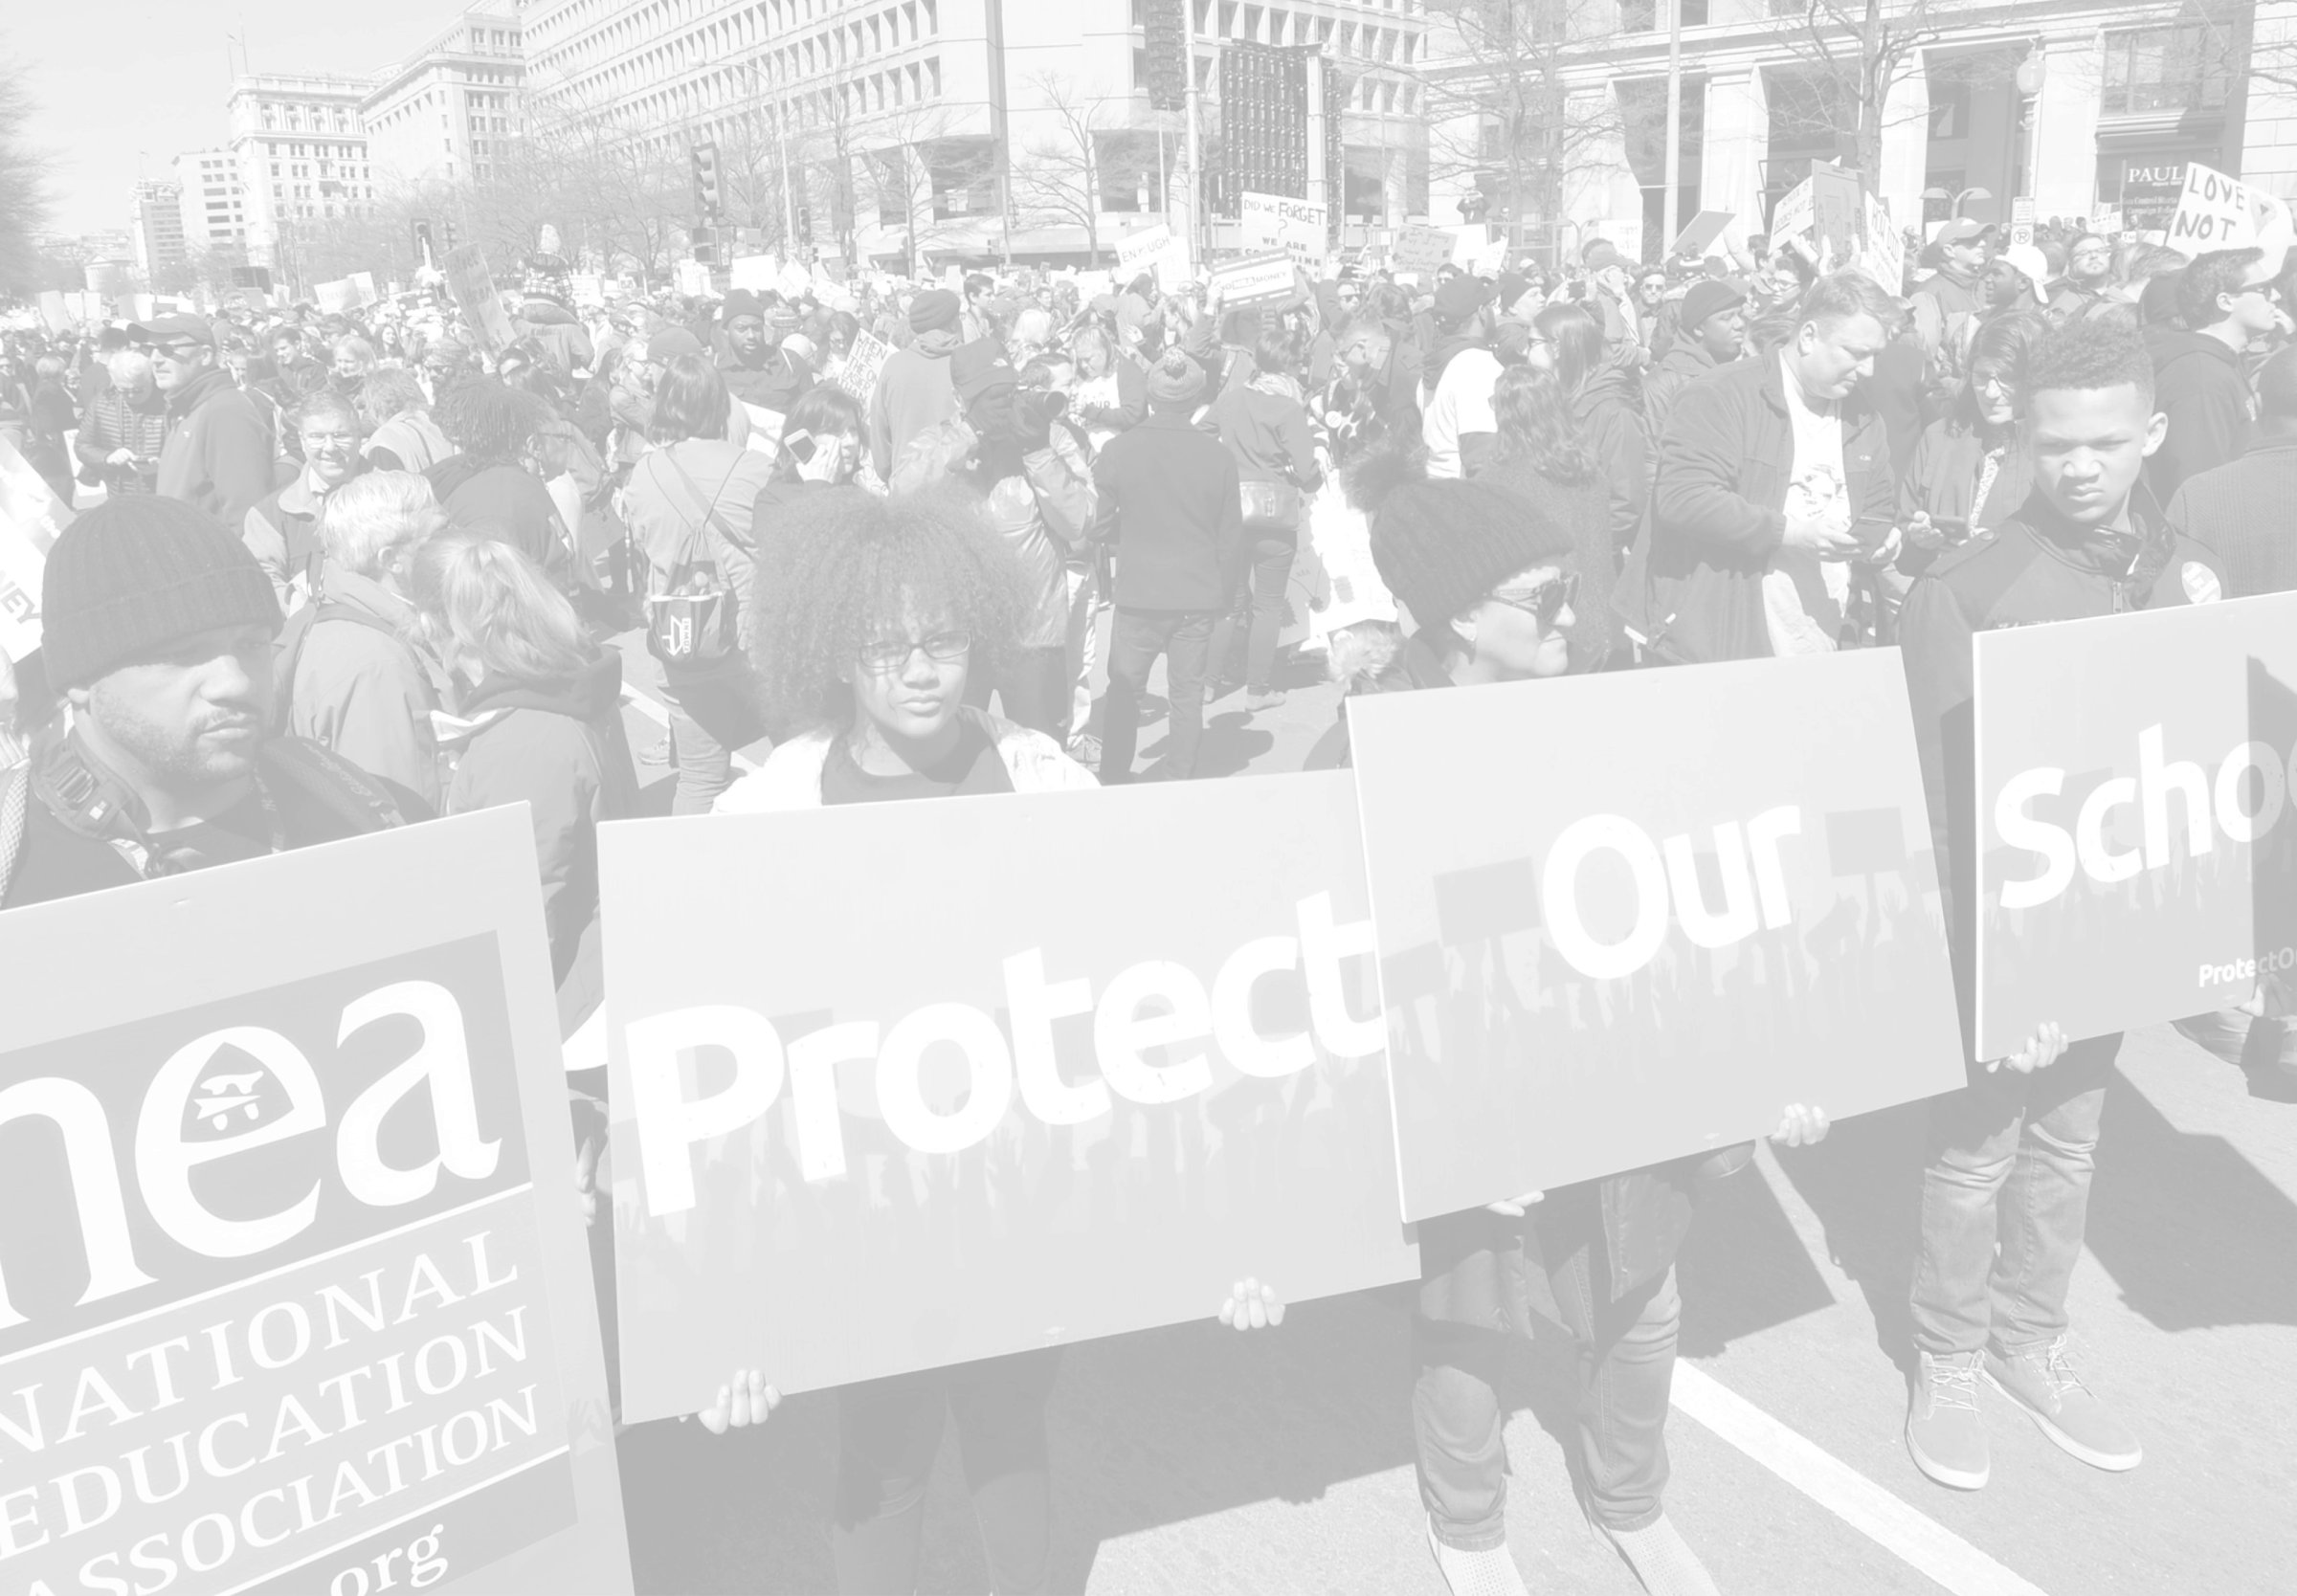 NEA educators marching in Washington, D.C.